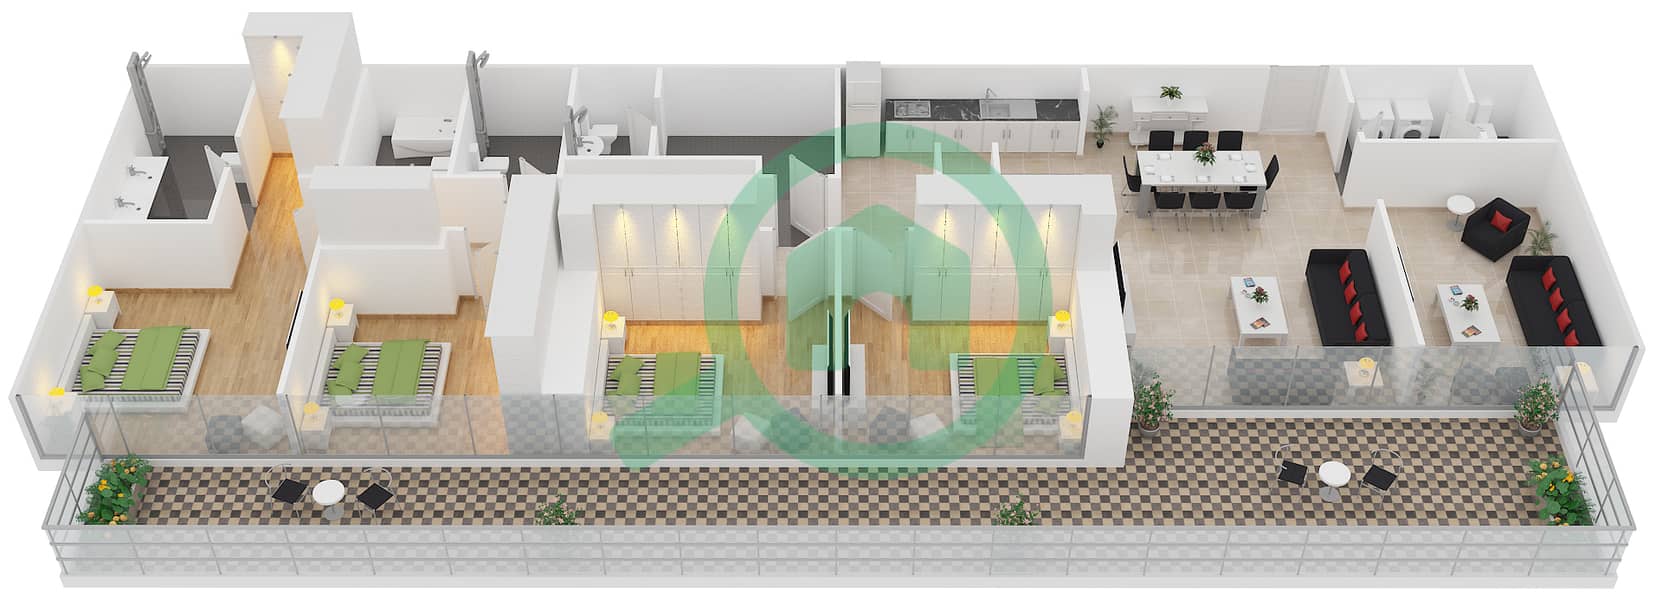 Зайя Хамени - Апартамент 4 Cпальни планировка Тип E interactive3D